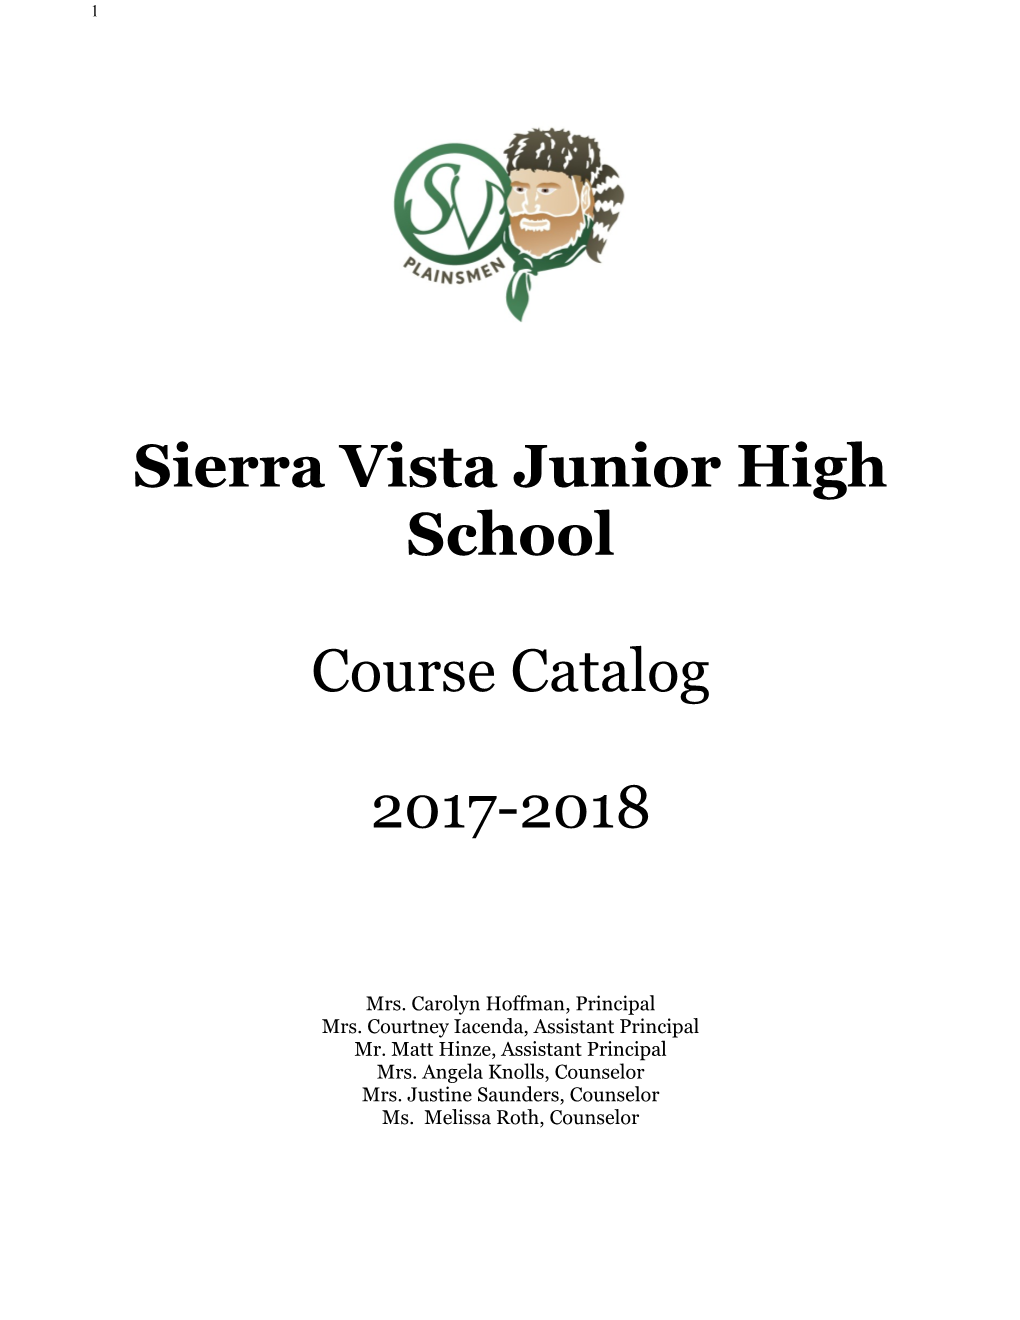 Sierra Vista Junior High School